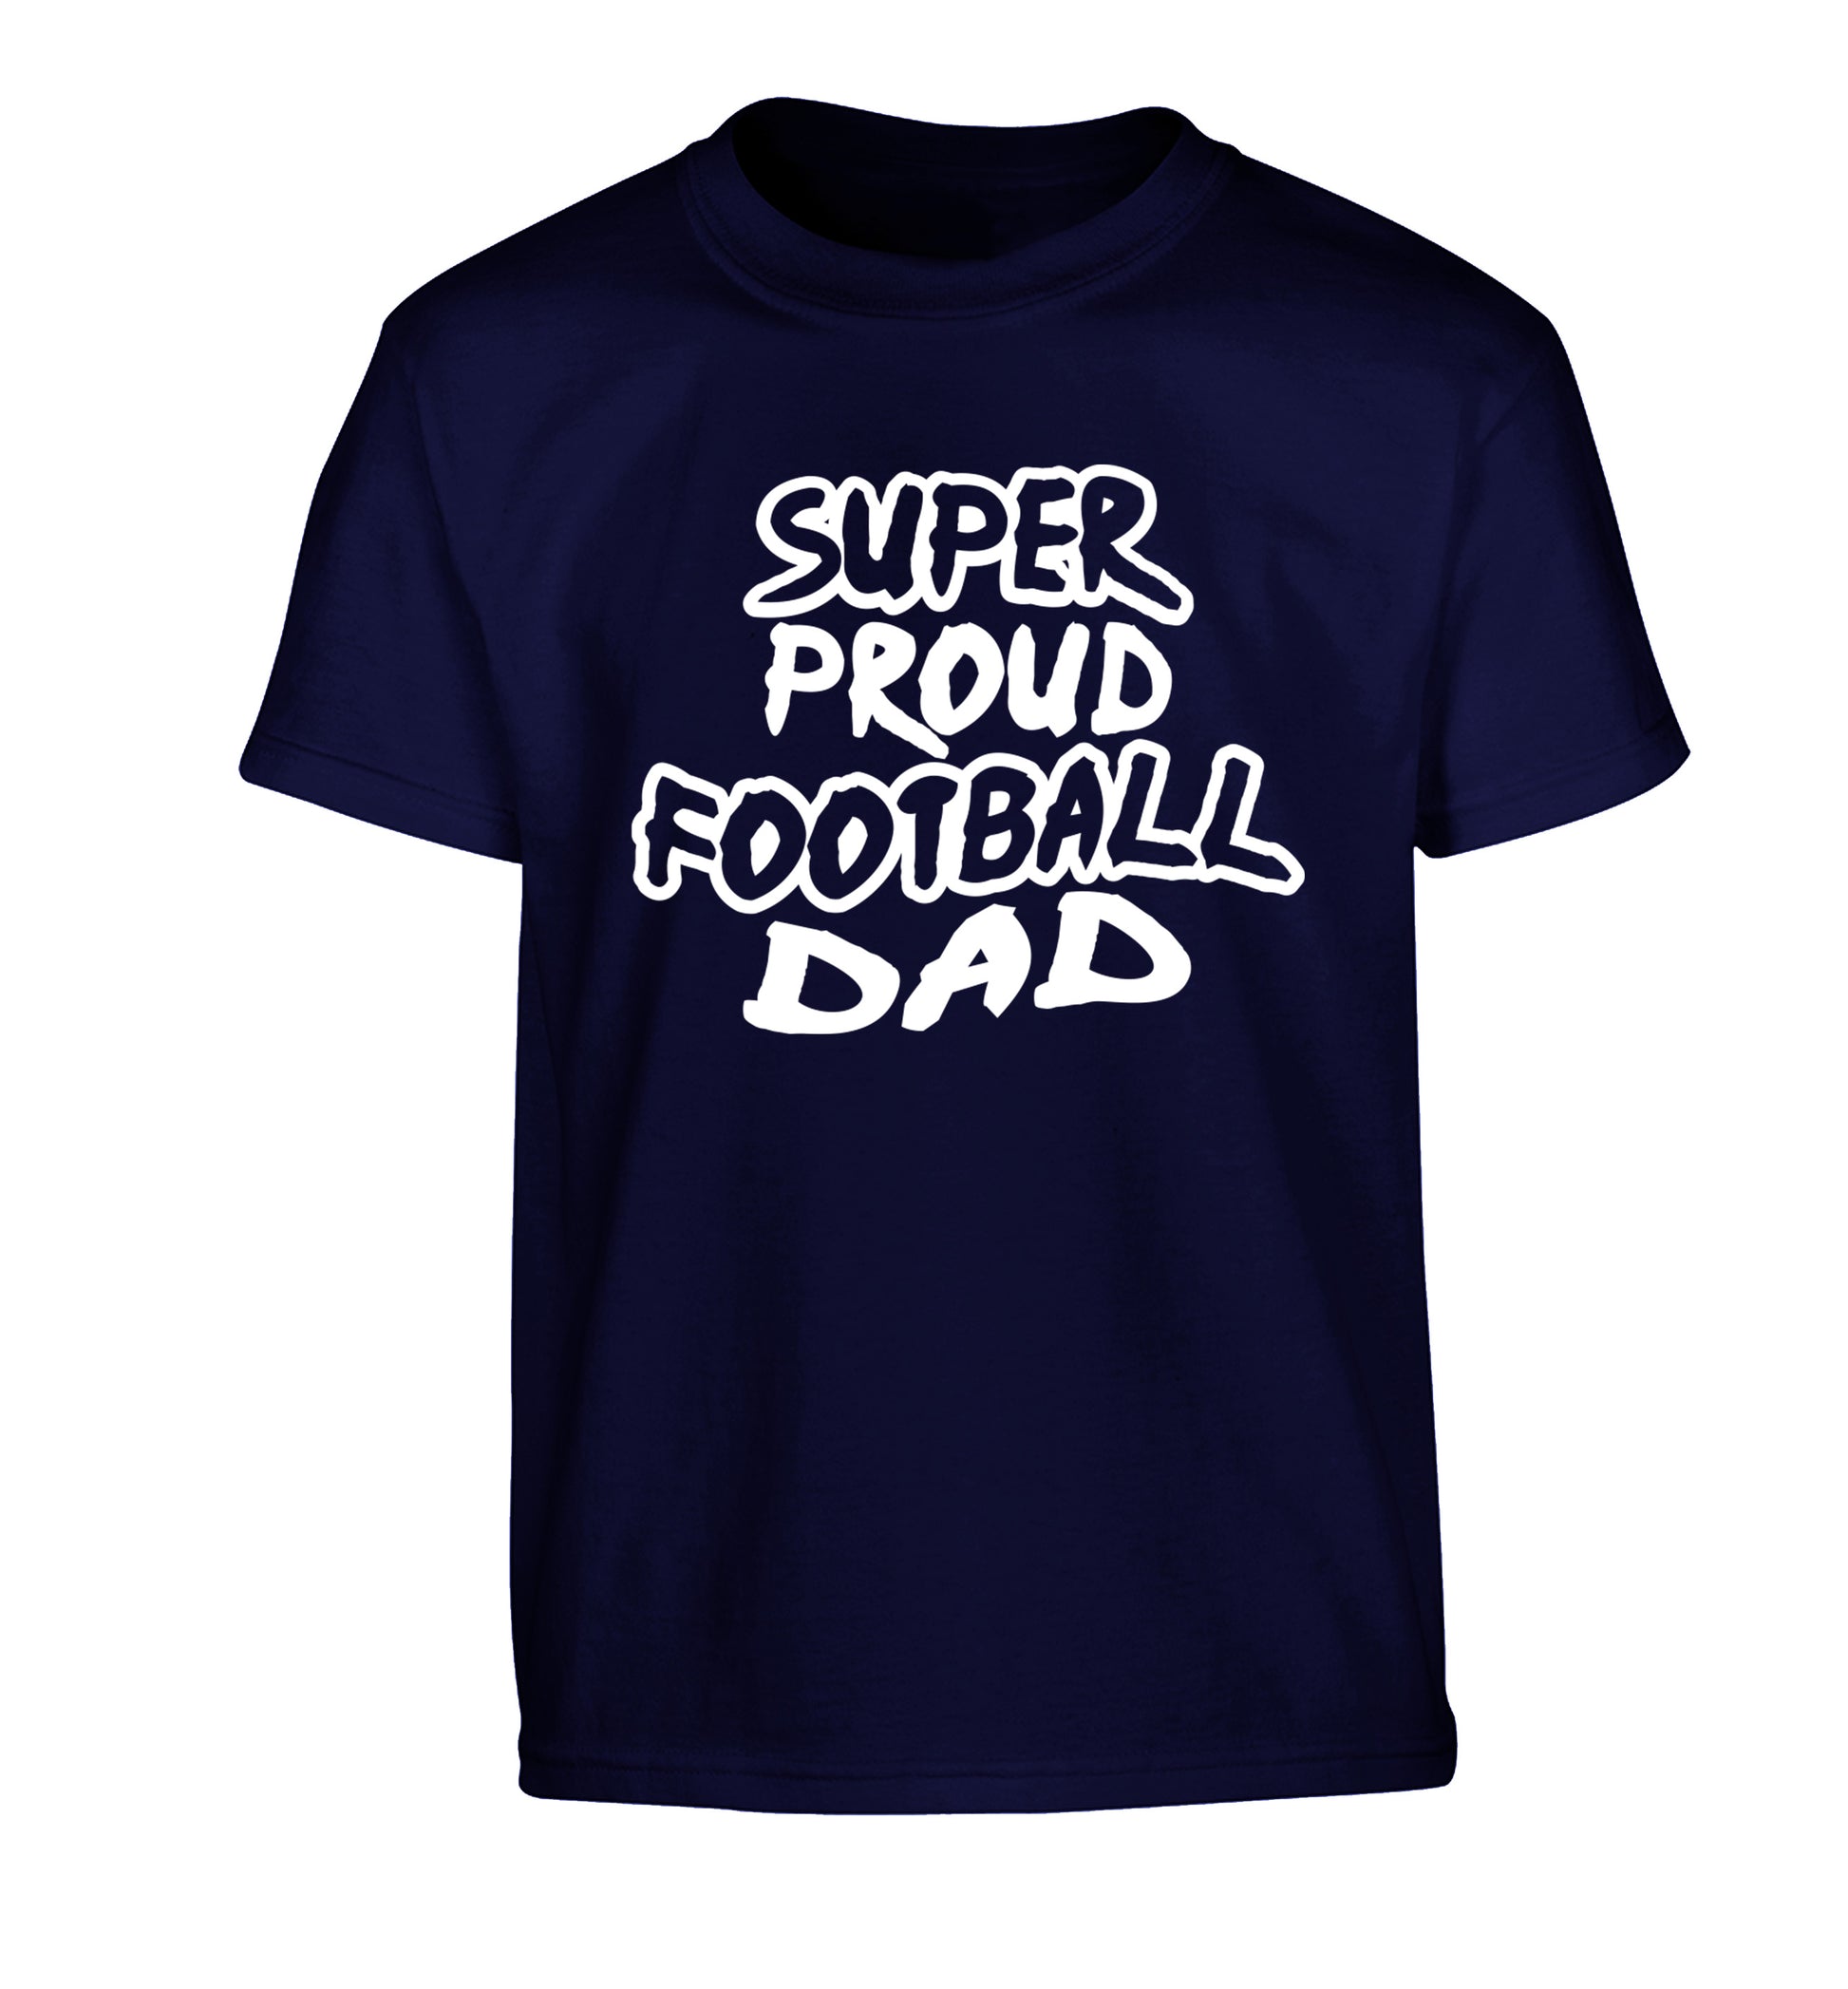 Super proud football dad Children's navy Tshirt 12-14 Years